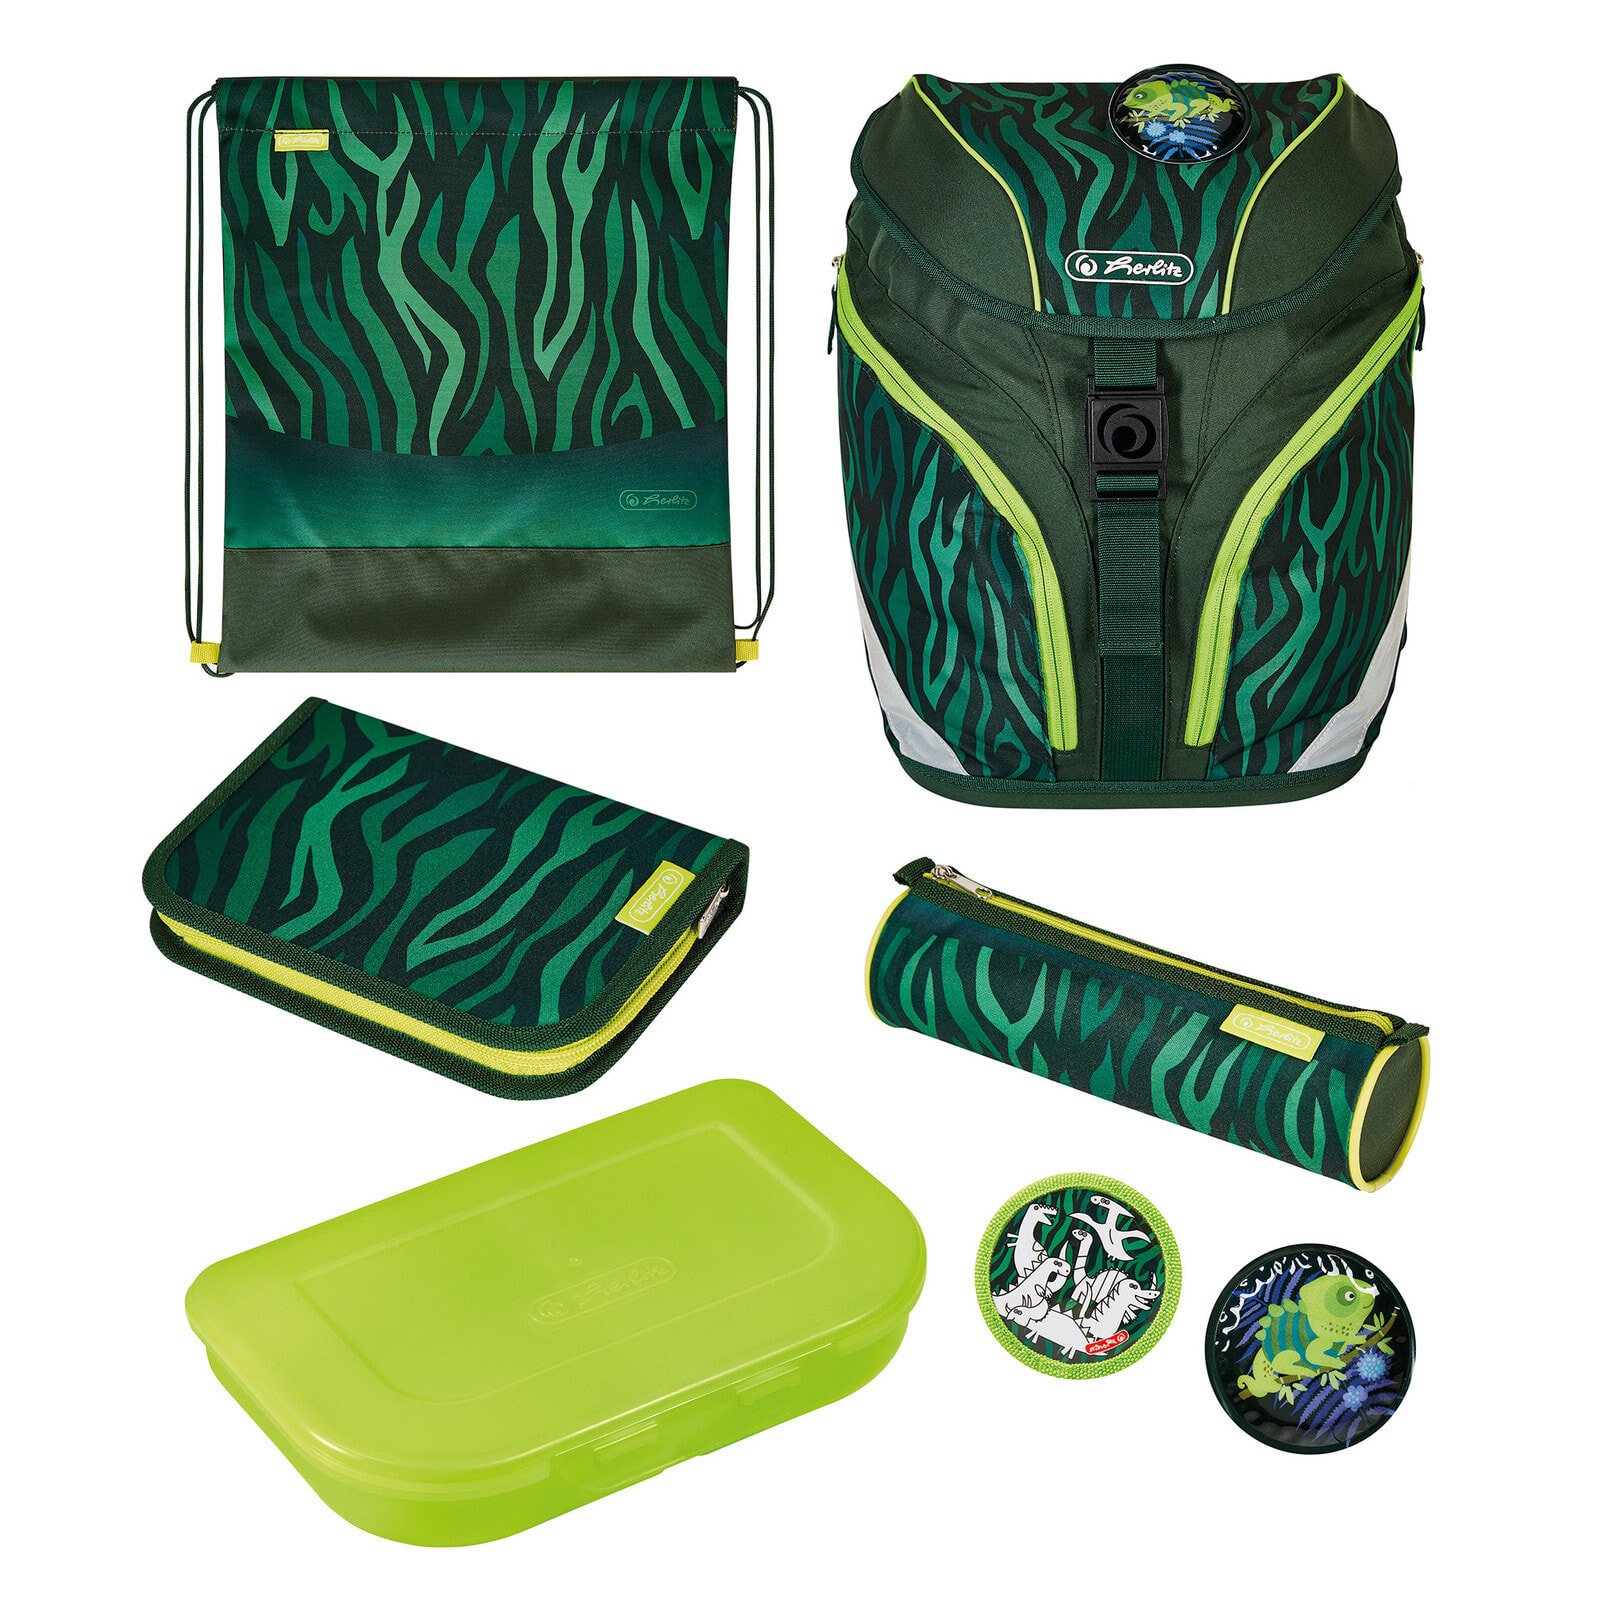 SoftLight Plus Jungle - Pencil pouch - Sport bag - Lunch box - Pencil case - School bag - Boy - Grade & elementary school - Backpack - 16 L - Side pocket